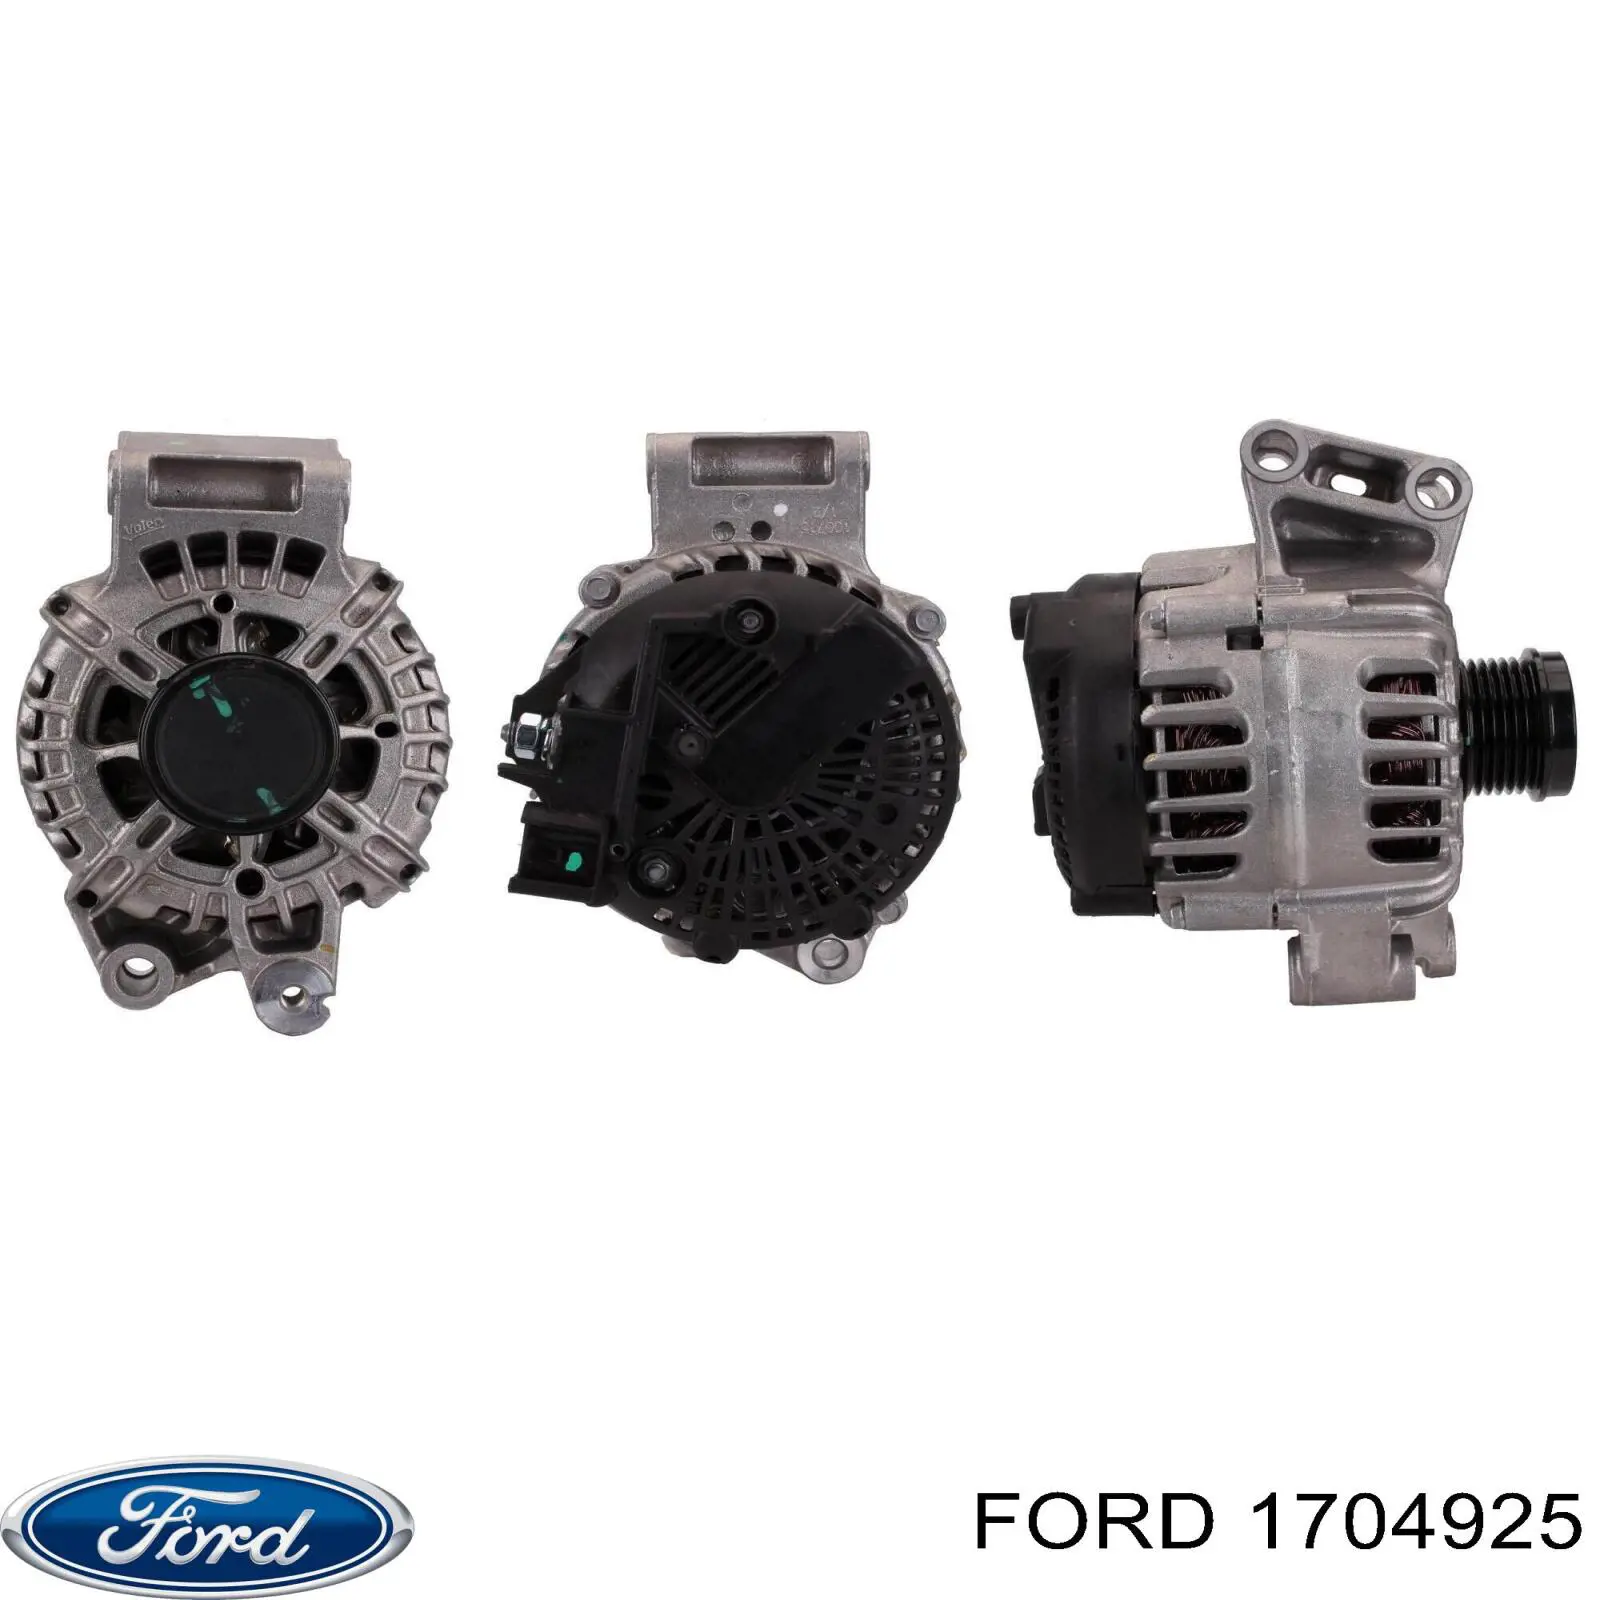 1704925 Ford генератор